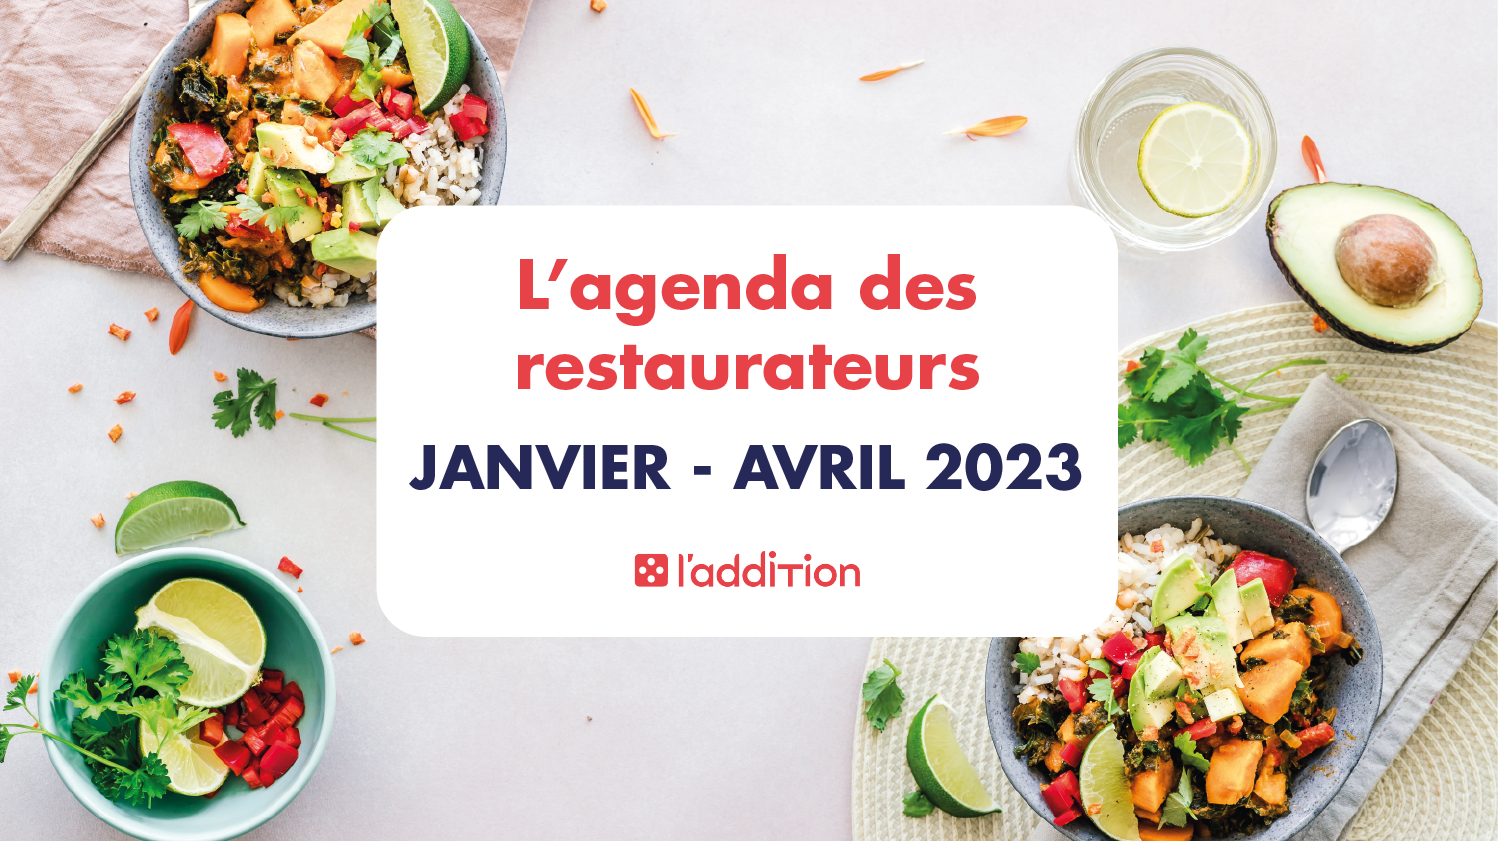 Agenda des restaurateurs - janvier / avril 2023